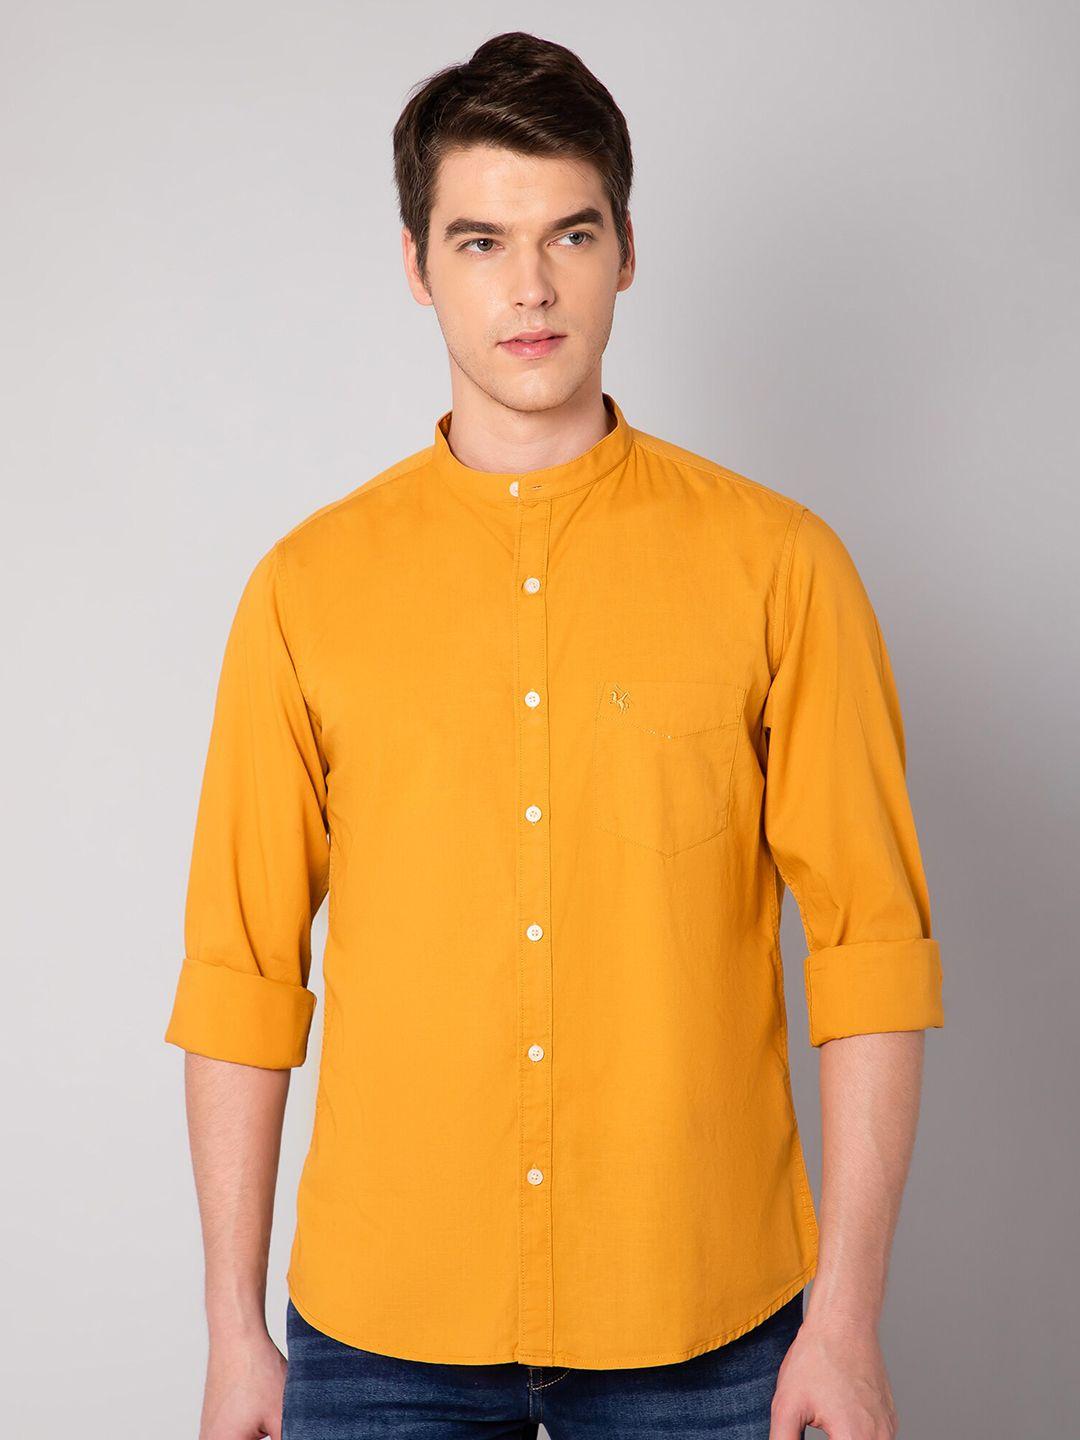 cantabil men gold-toned casual shirt